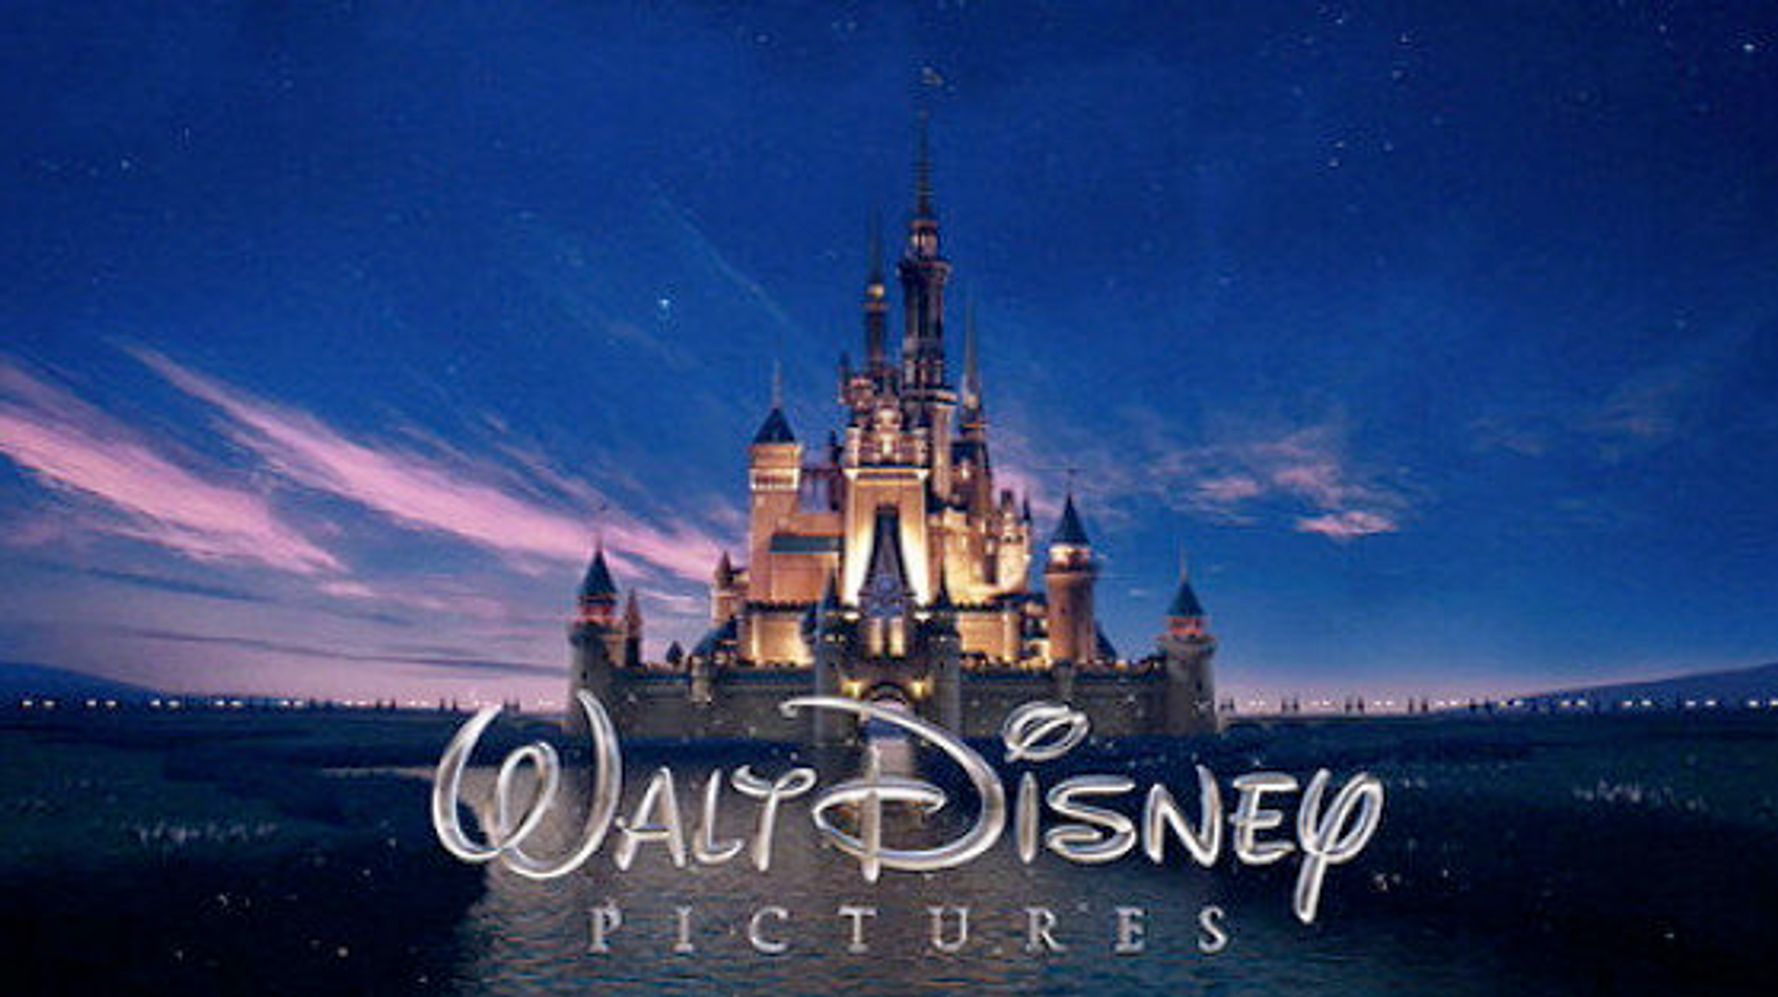 Le monde de dory - The Walt Disney Company France Newsroom